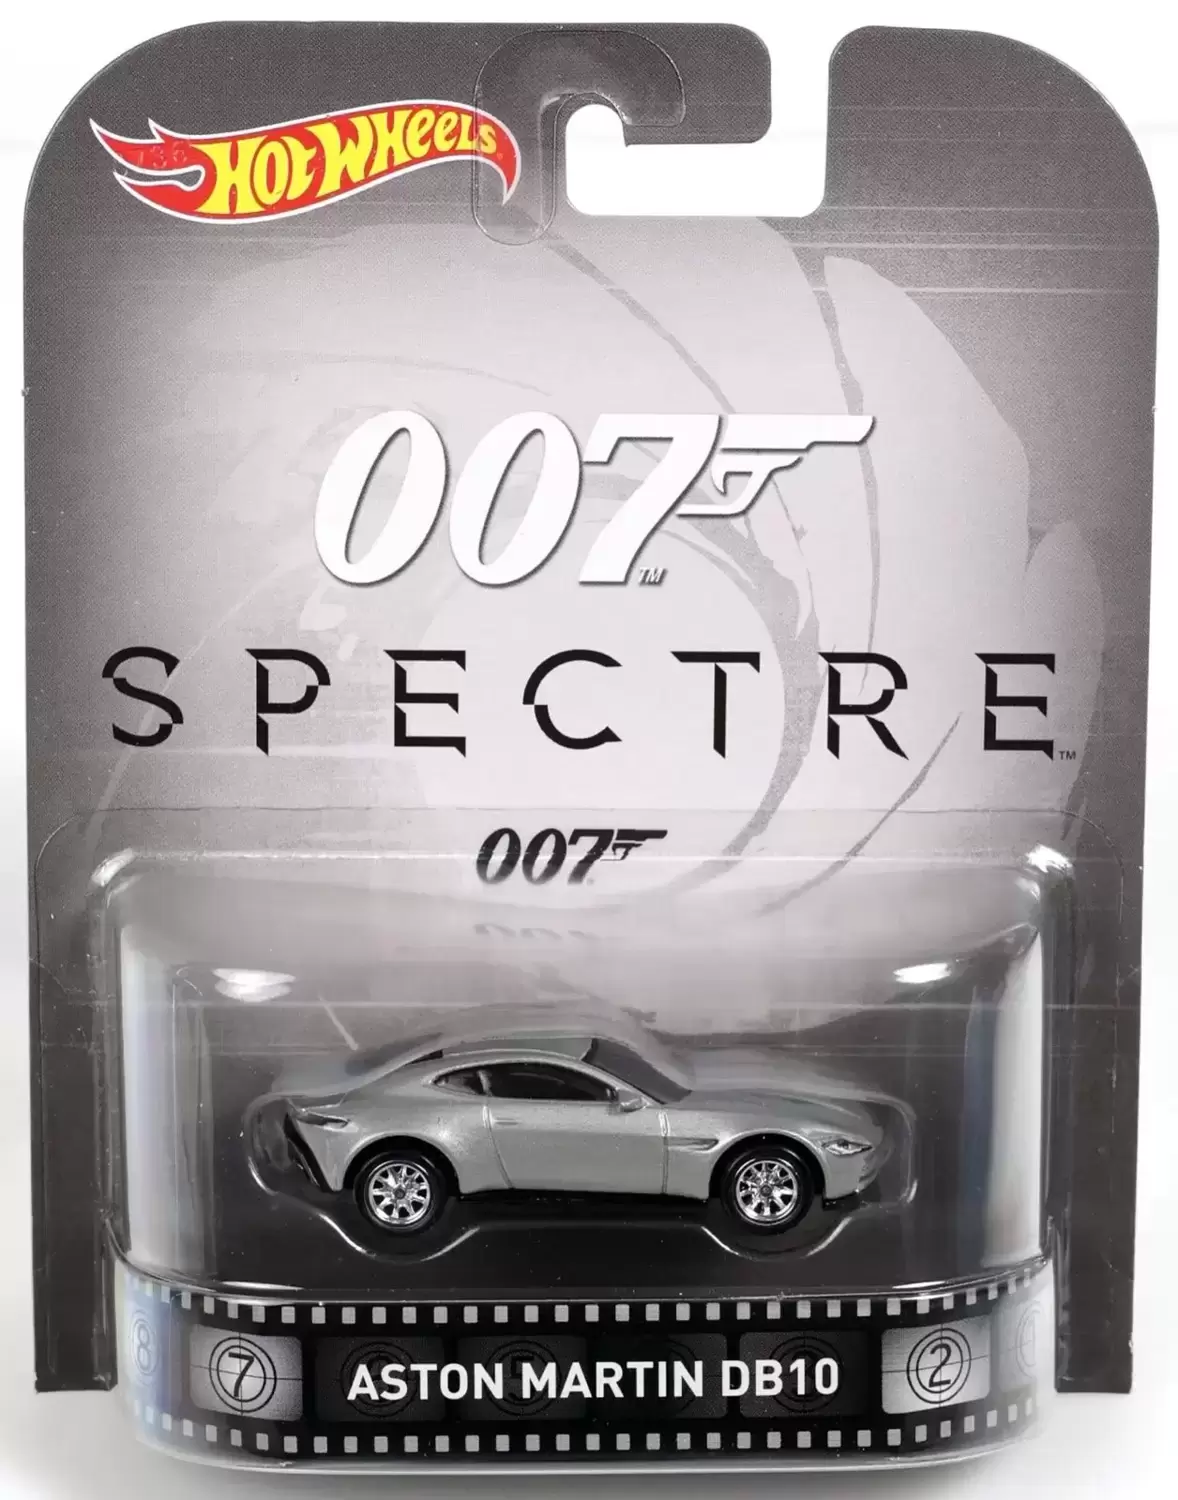 Retro Entertainment Hot Wheels - 007 Spectre - Aston Martin DB10